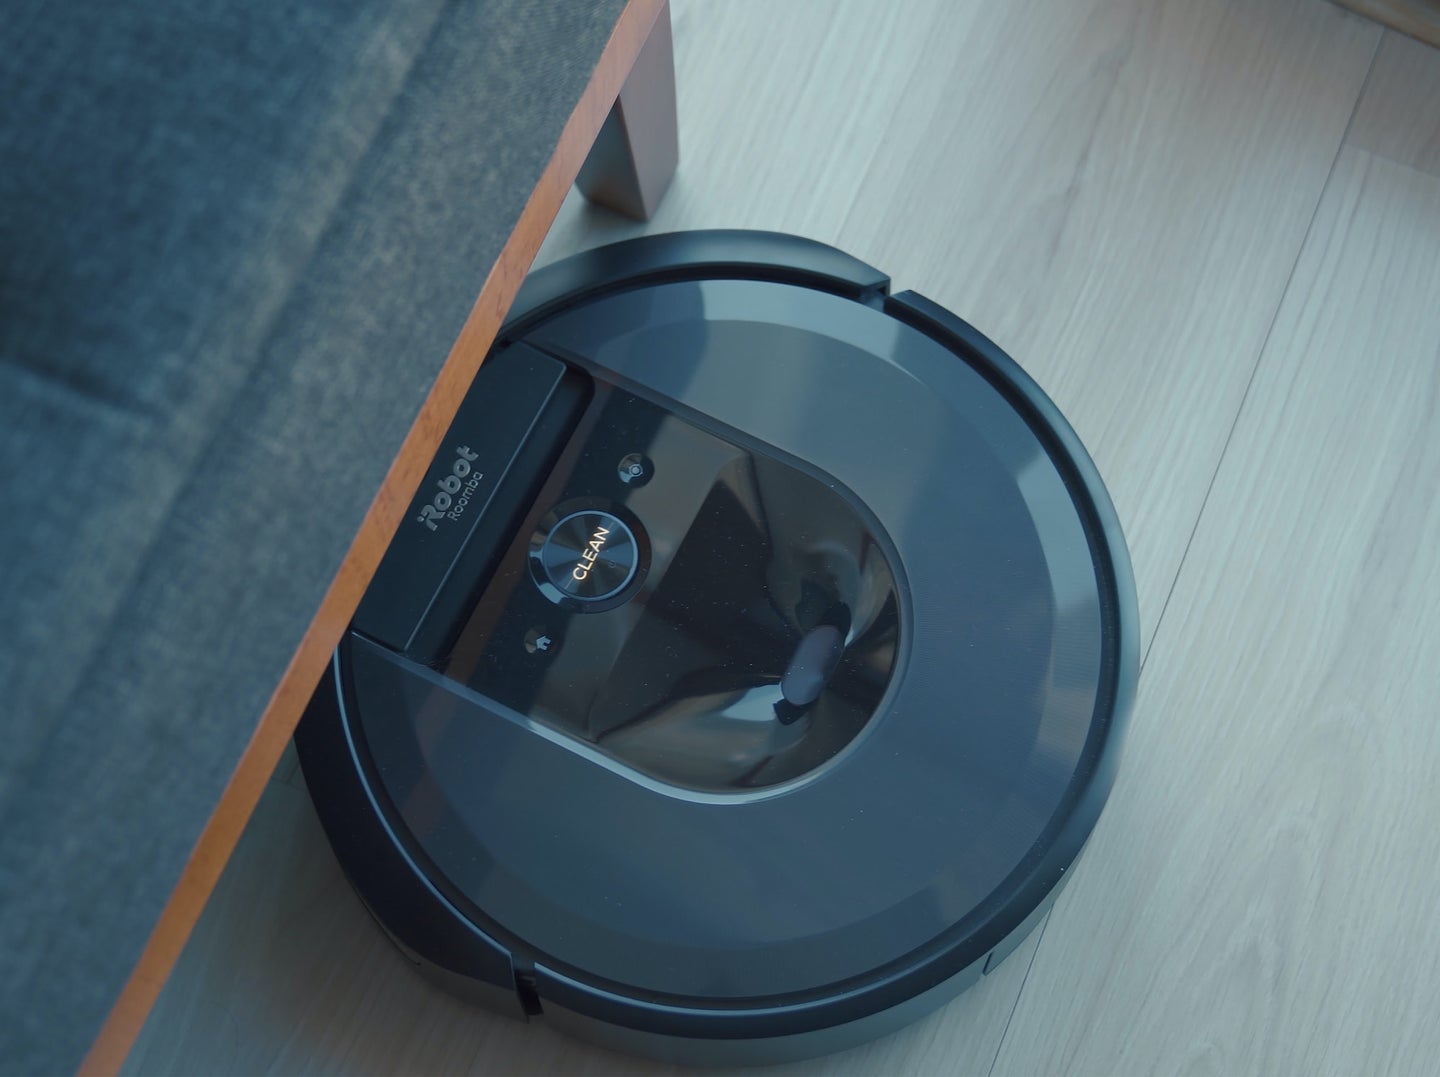 iRobot Roomba vacuum going underneath couch